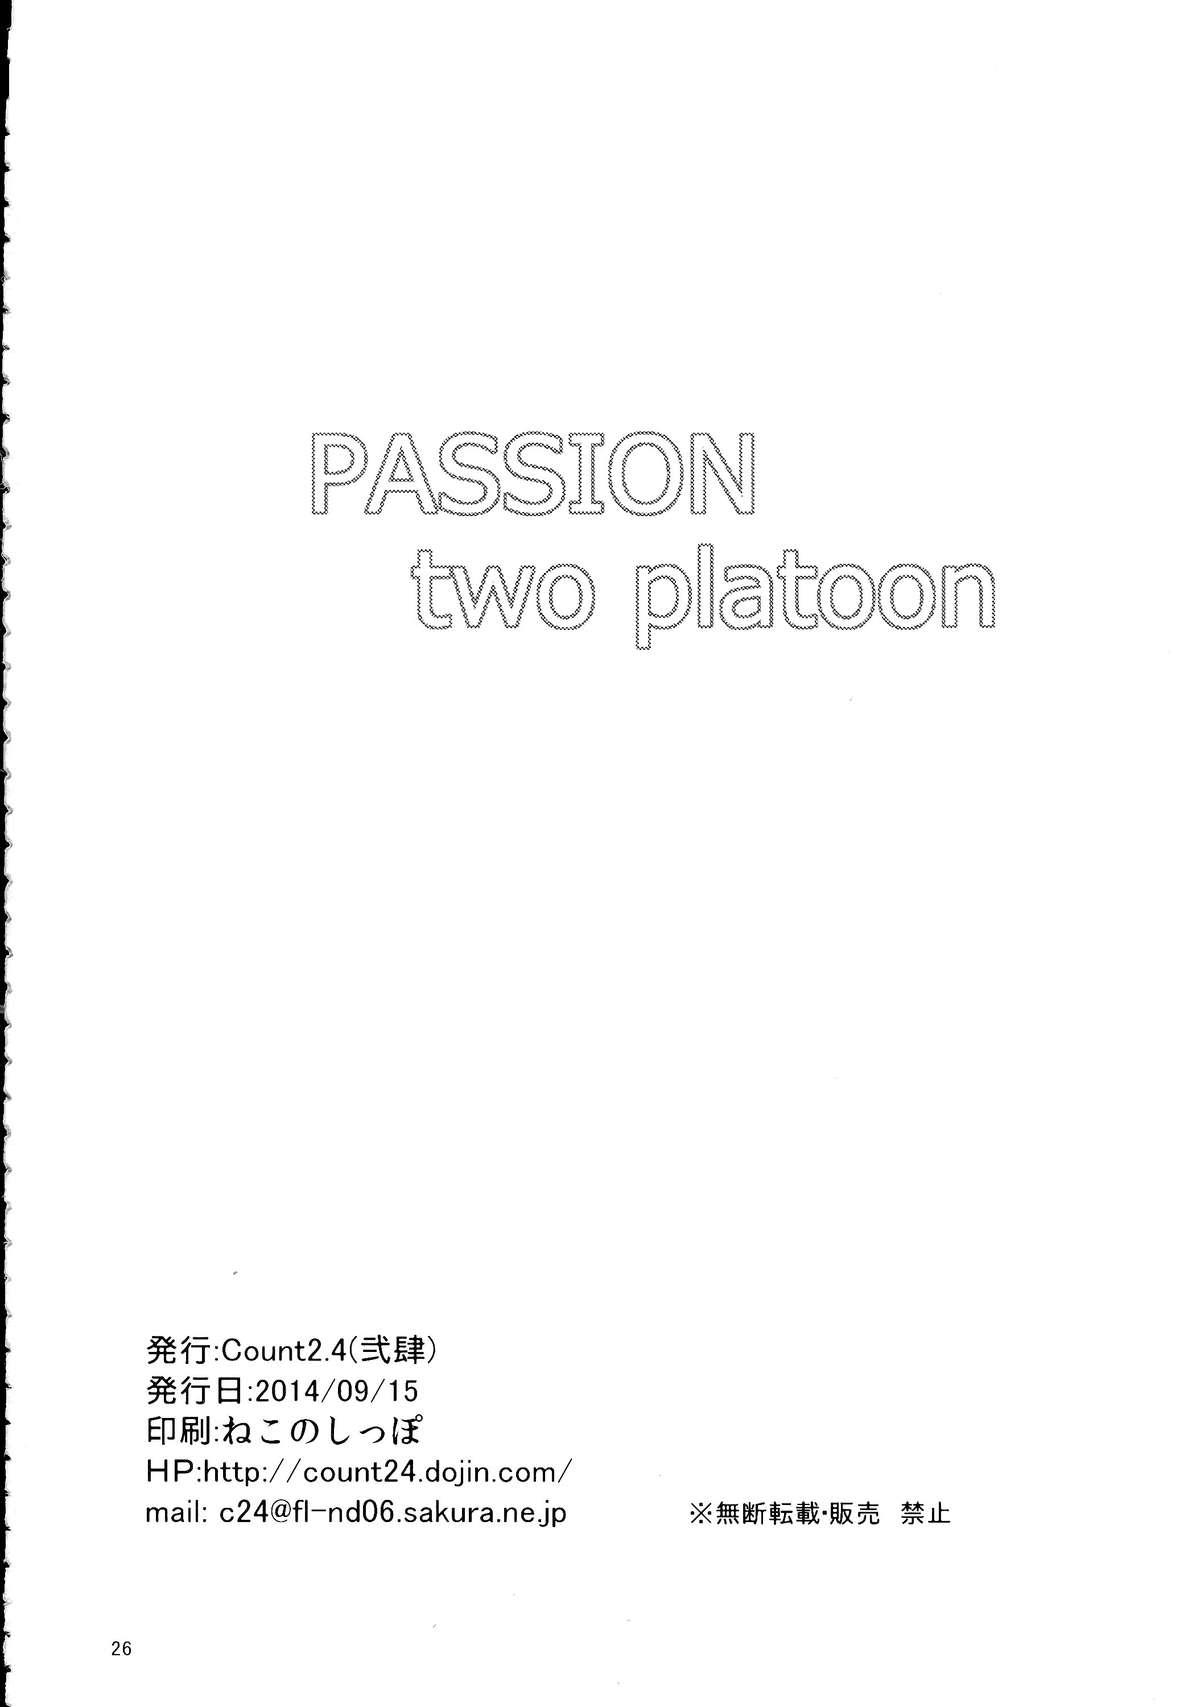 PASSION two platoon 24